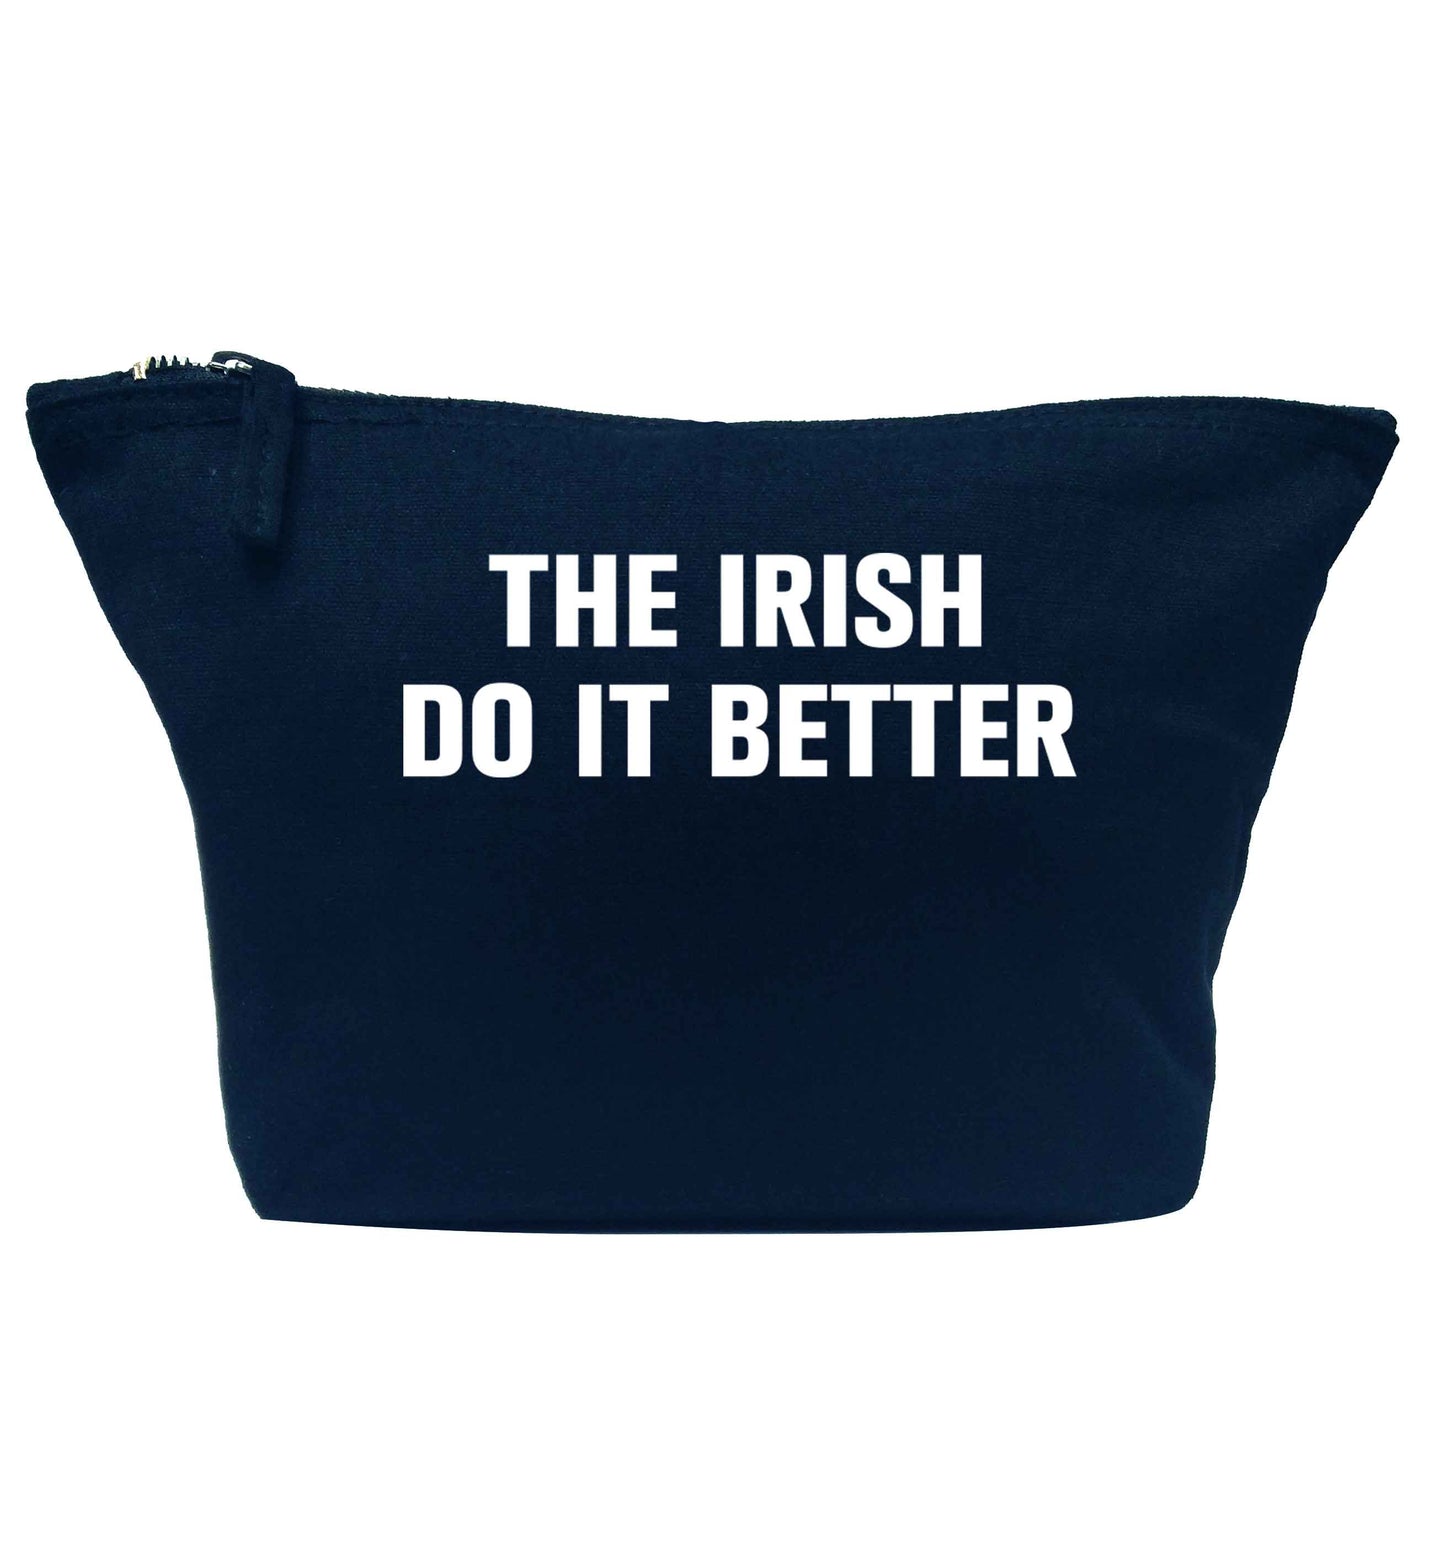 The Irish do it better navy makeup bag